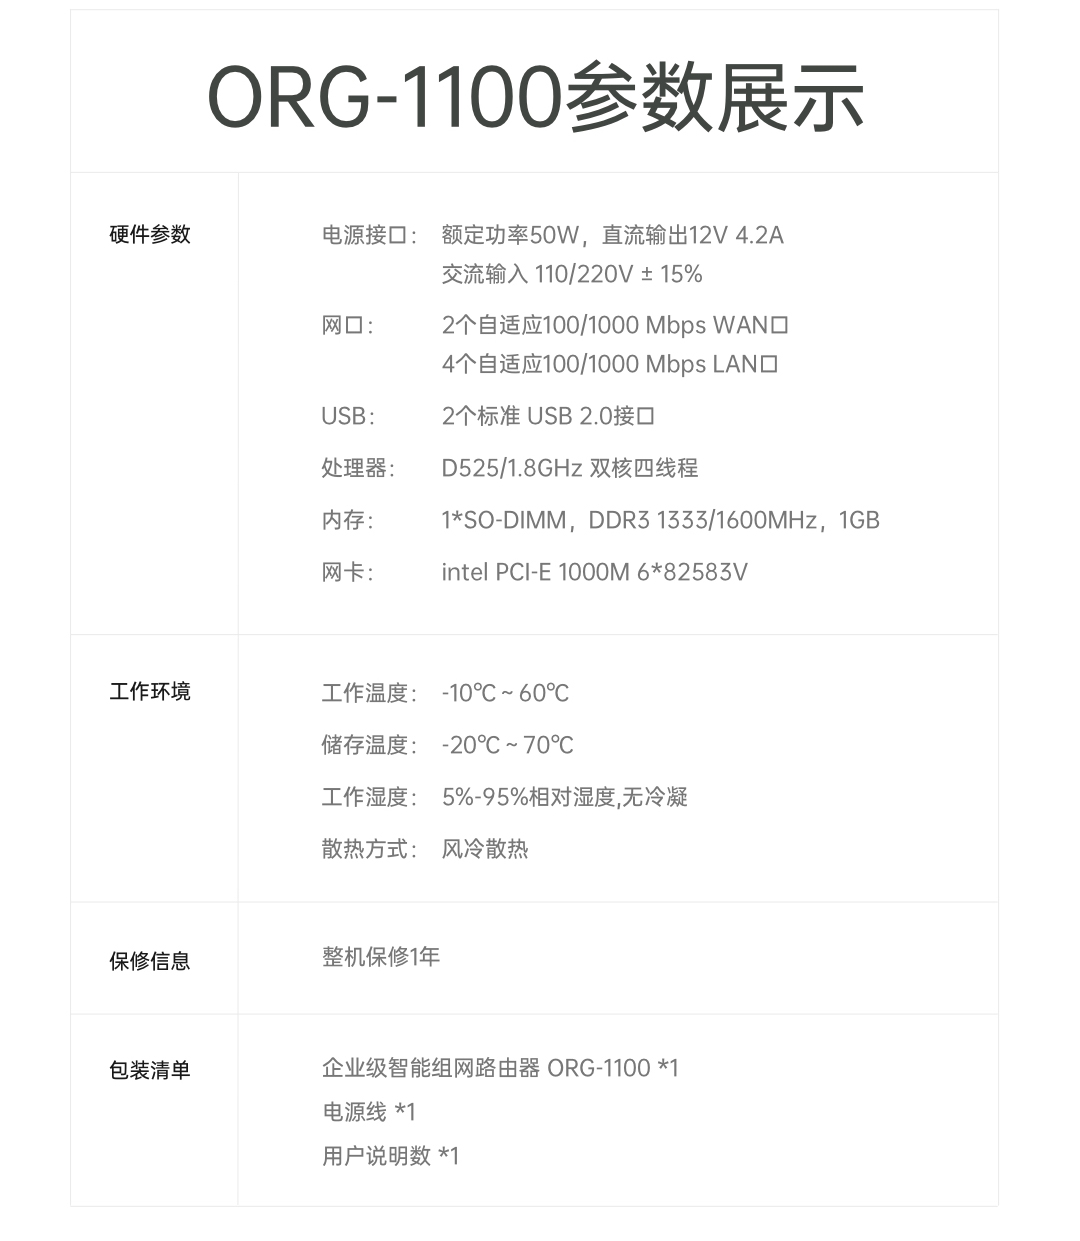 ORG-1100_09.jpg